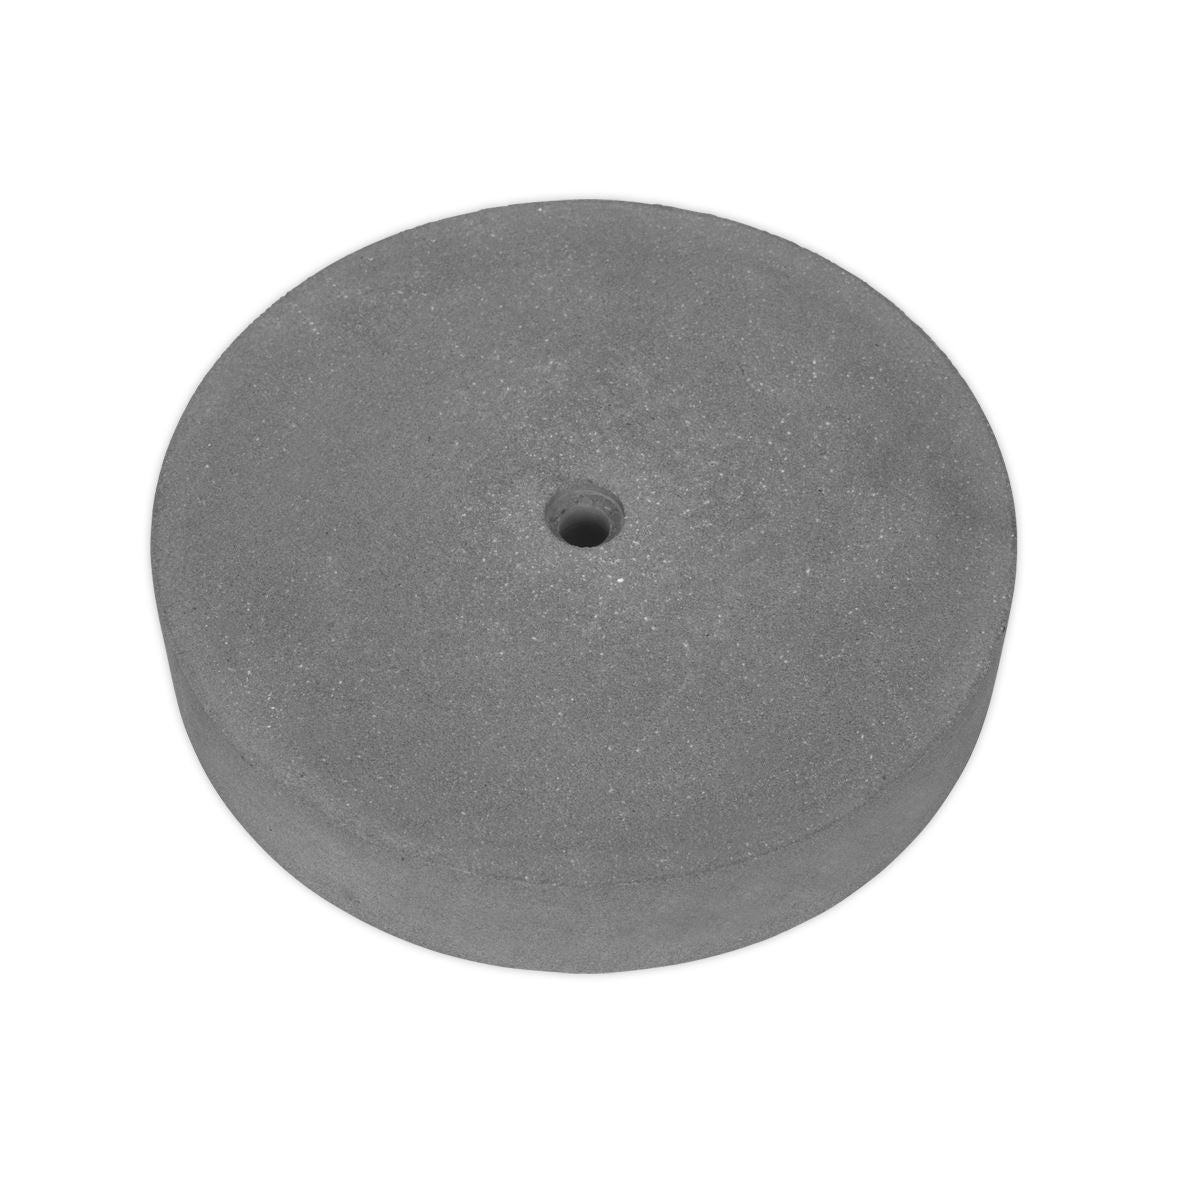 Sealey Sharpening Stone Ø200 x 40mm 12mm Bore